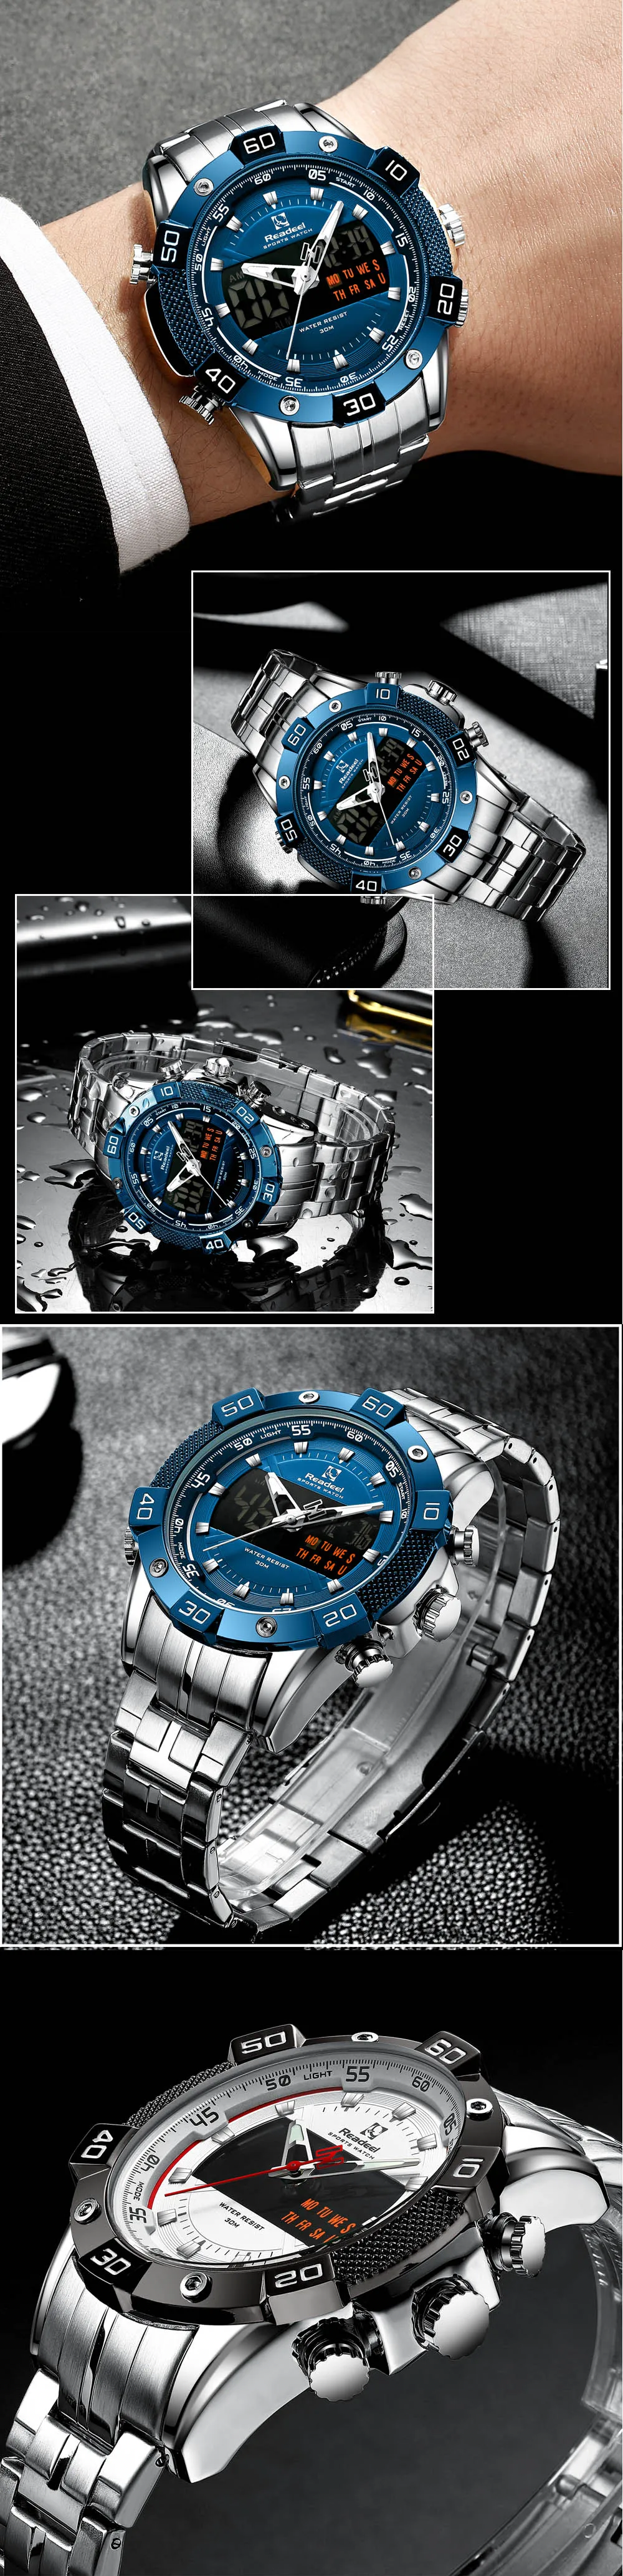 H5eb2a1583ca24d0aa36e577b1e4d4a0e8 2020 Luxury Brand Waterproof Military Sport Watches Men Silver Steel Digital Quartz Analog Watch Clock Relogios Masculinos